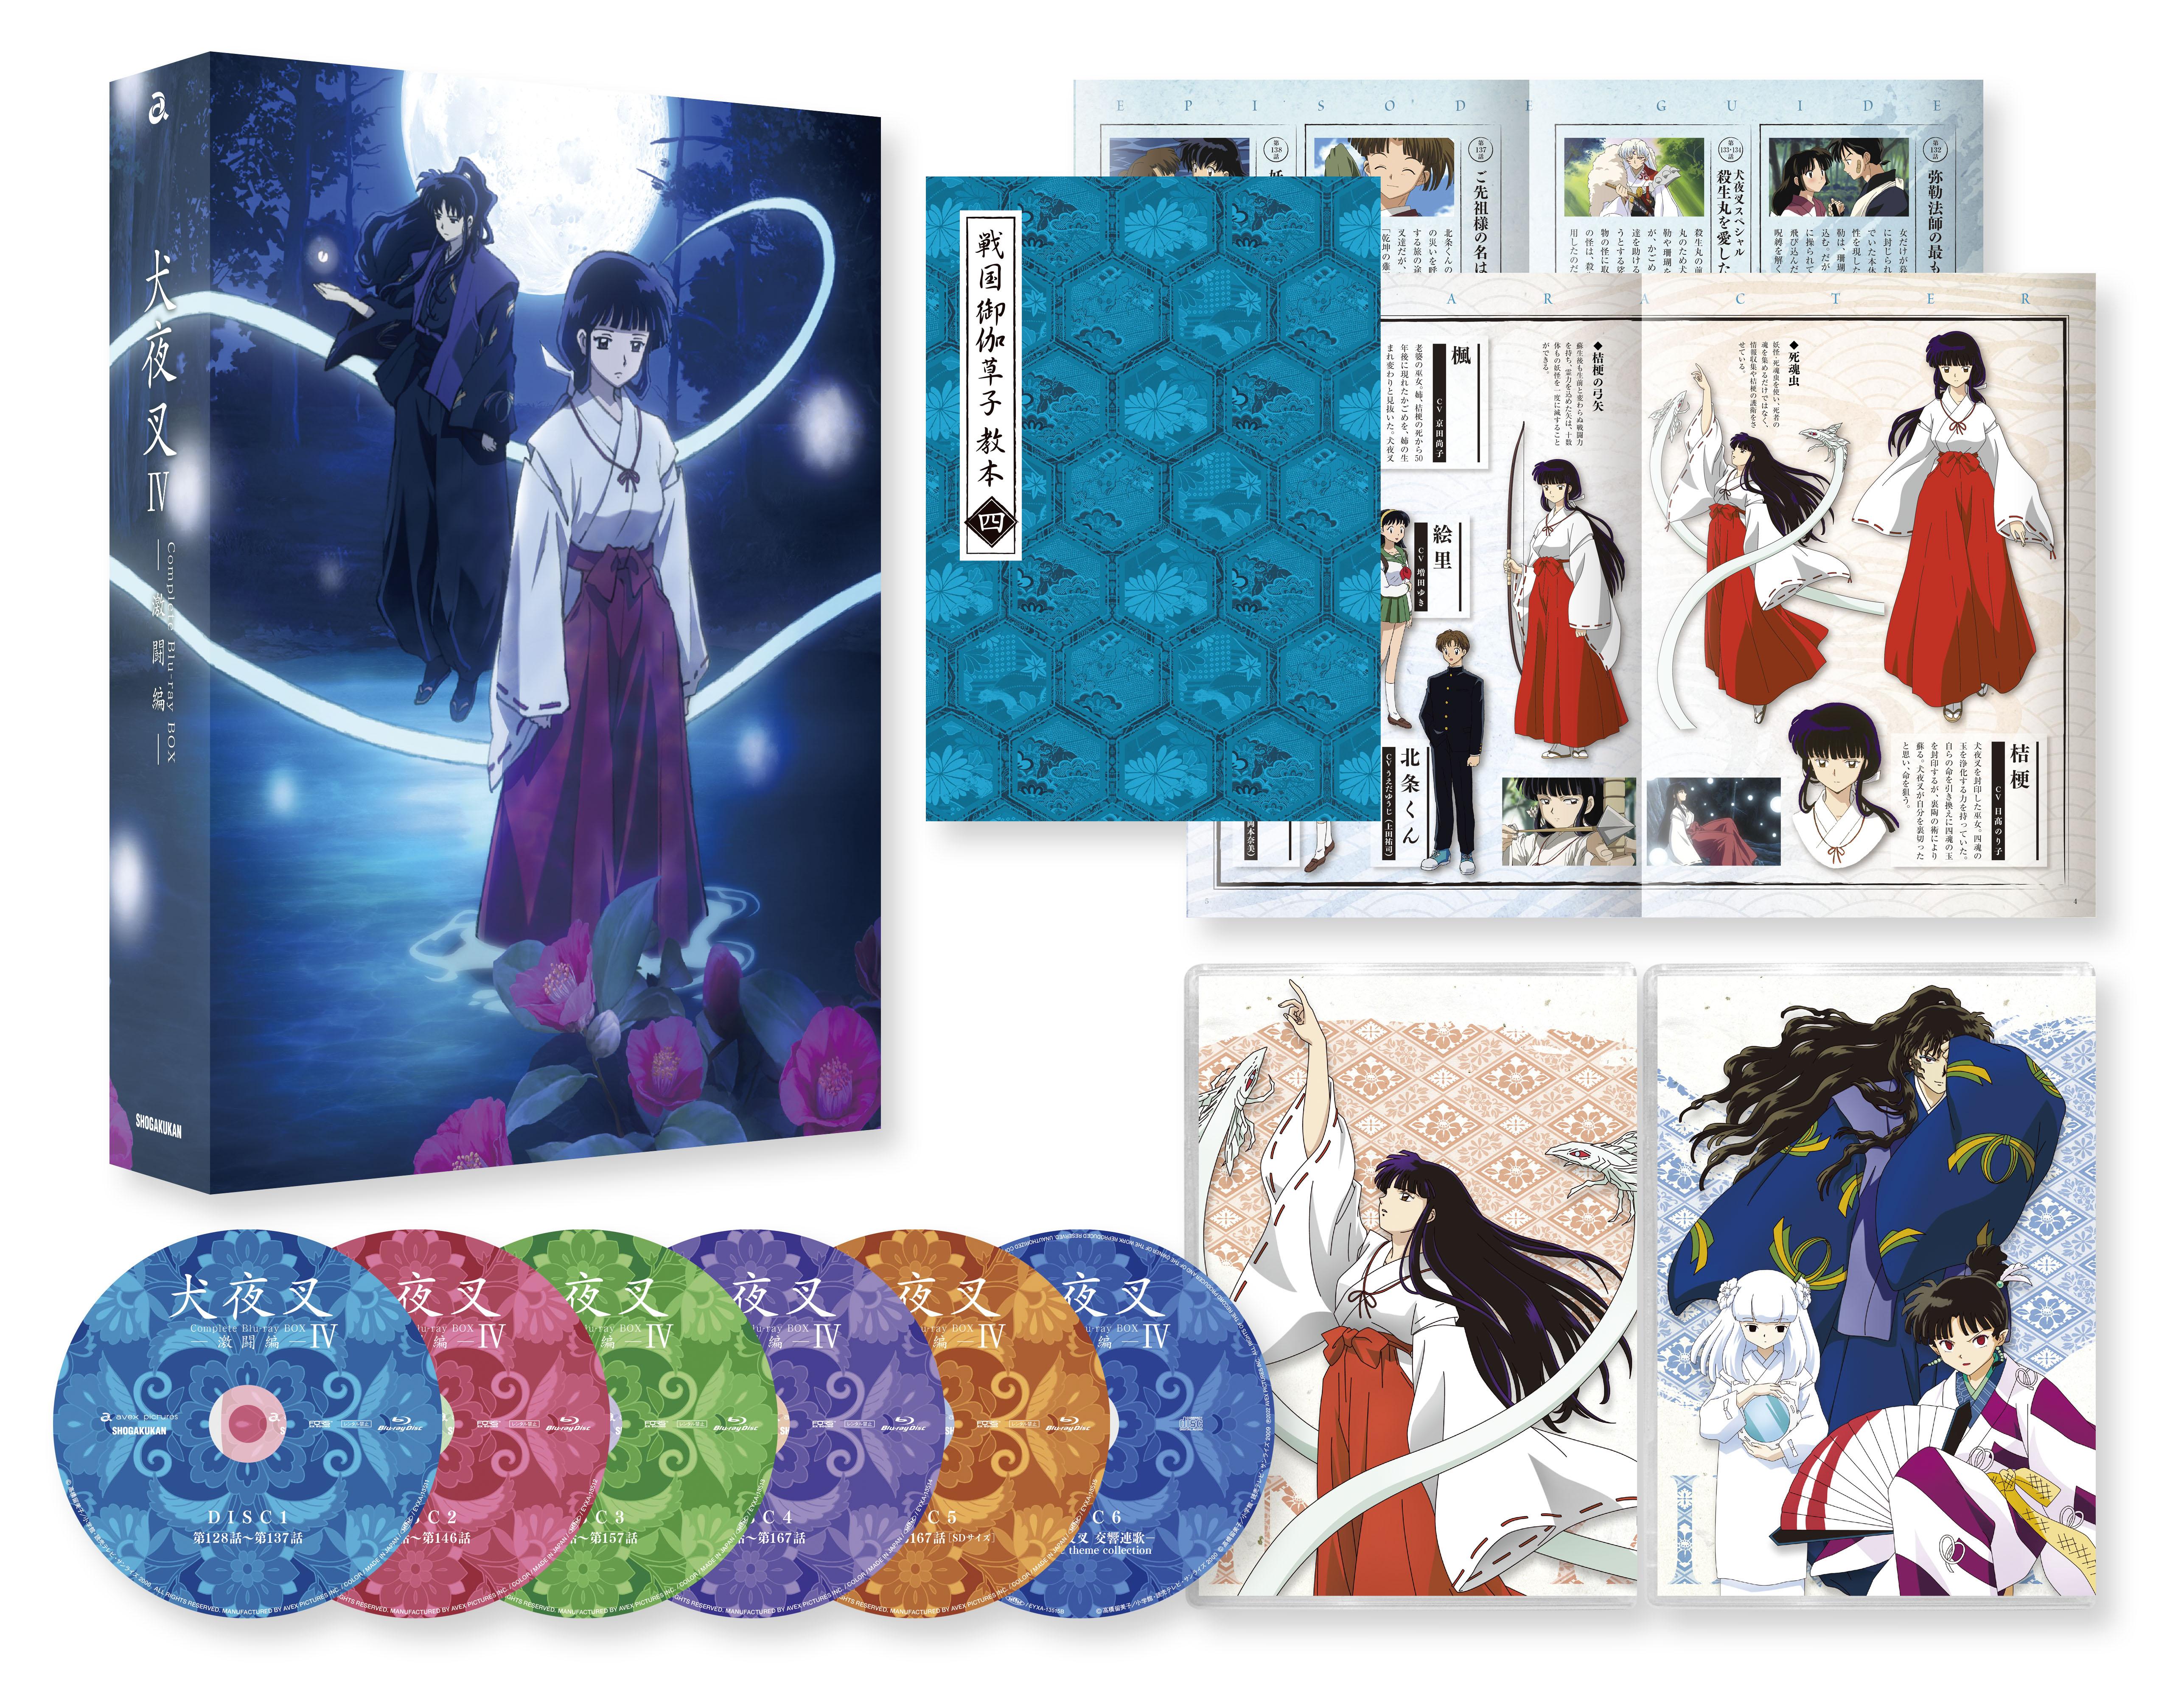 BOX4 激闘編 | 犬夜叉 Complete Blu-ray BOXシリーズ